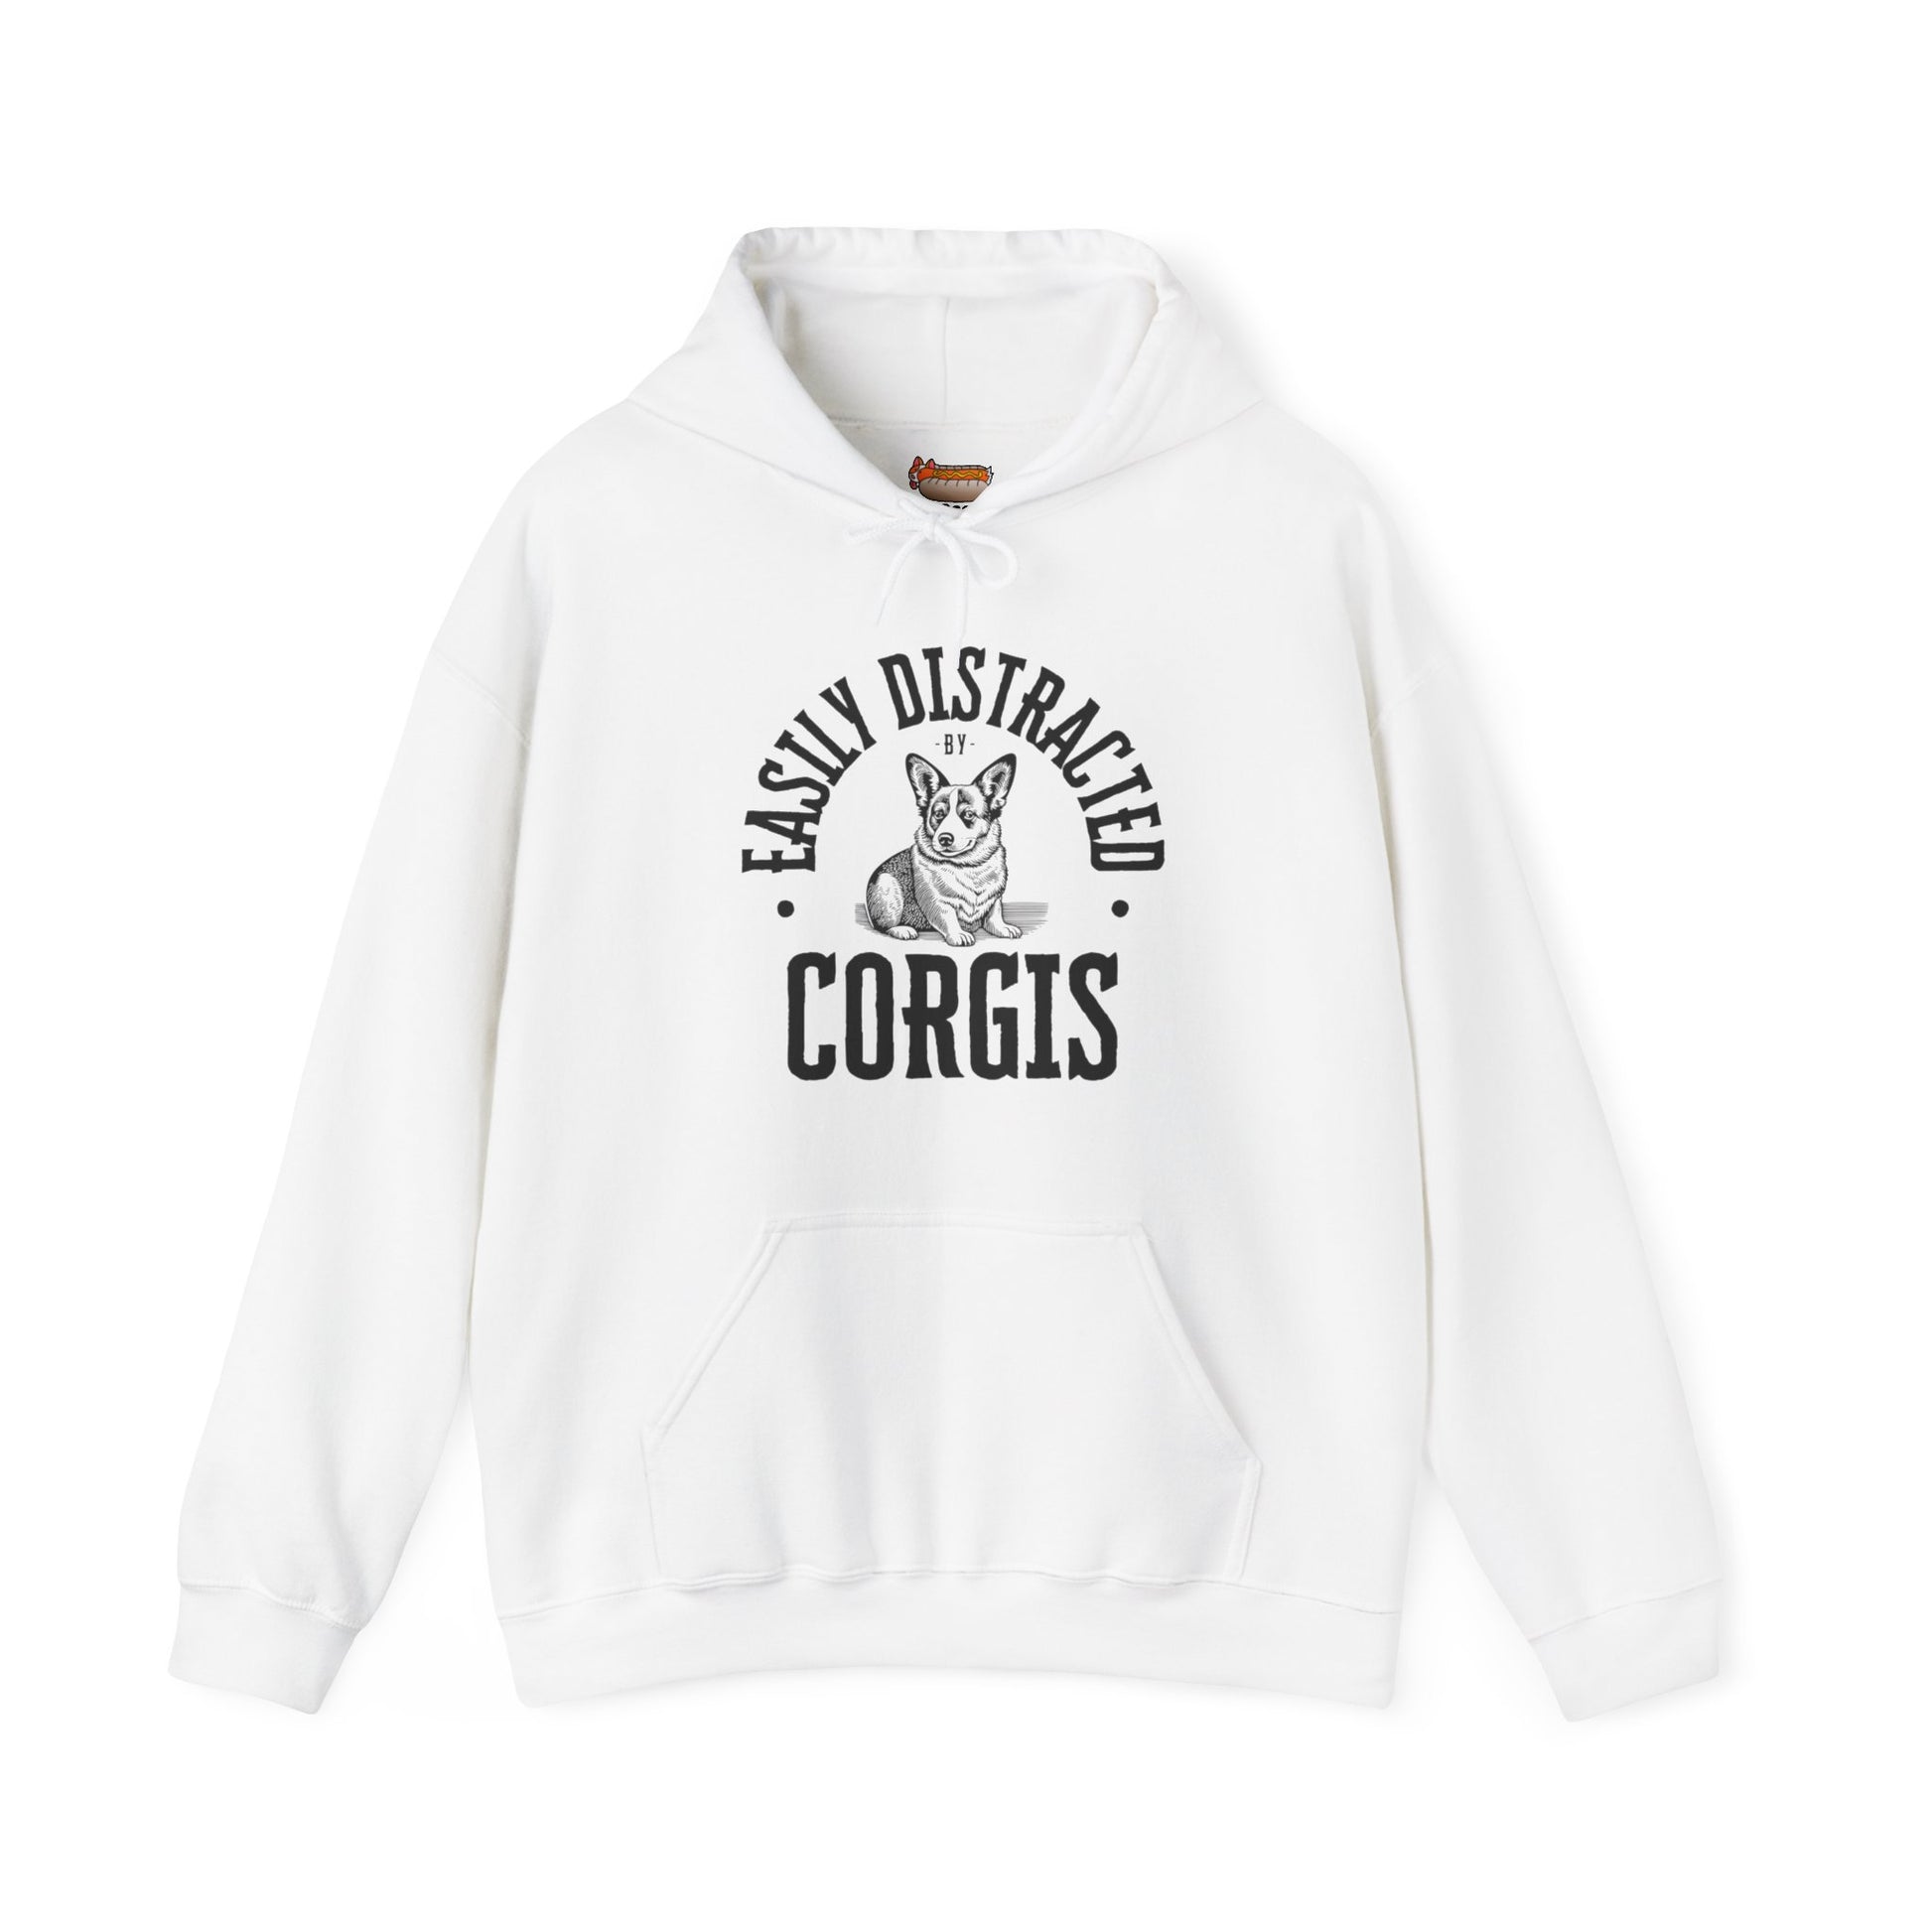 white corgi hoodie easily distracted women men sweatshirt shirt